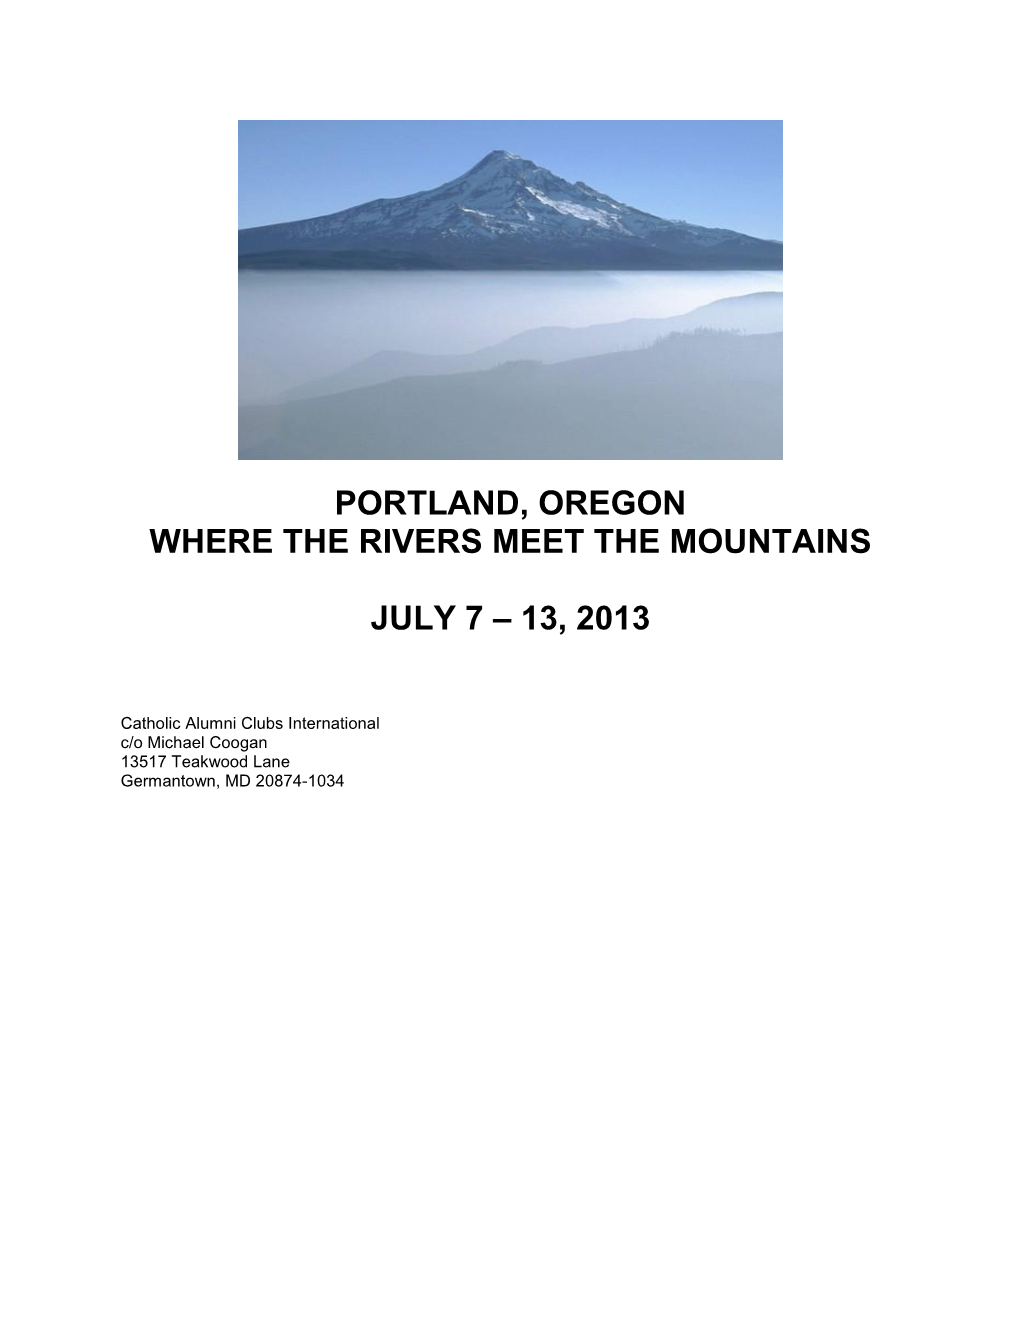 Portland, Oregon Where the Rivers Meet the Mountains July 7